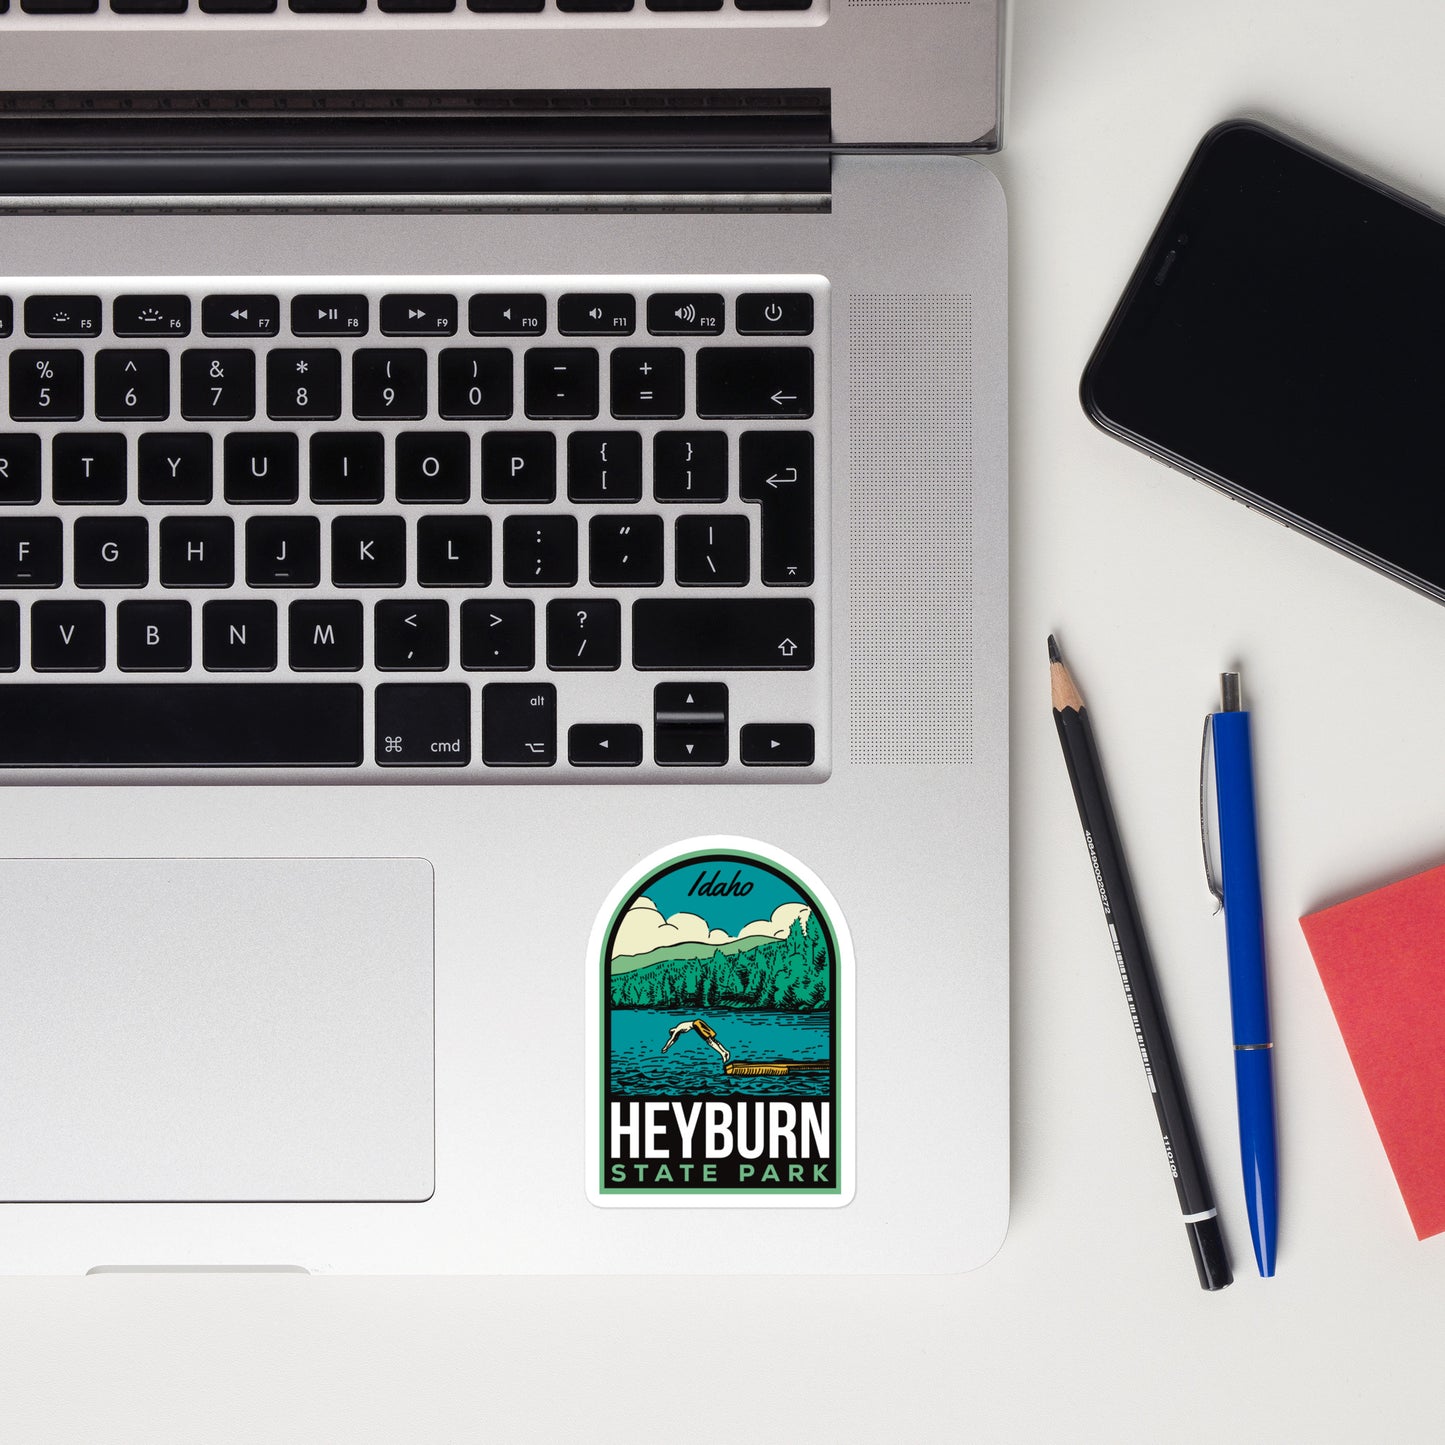 A sticker of Heyburn State Park on a laptop